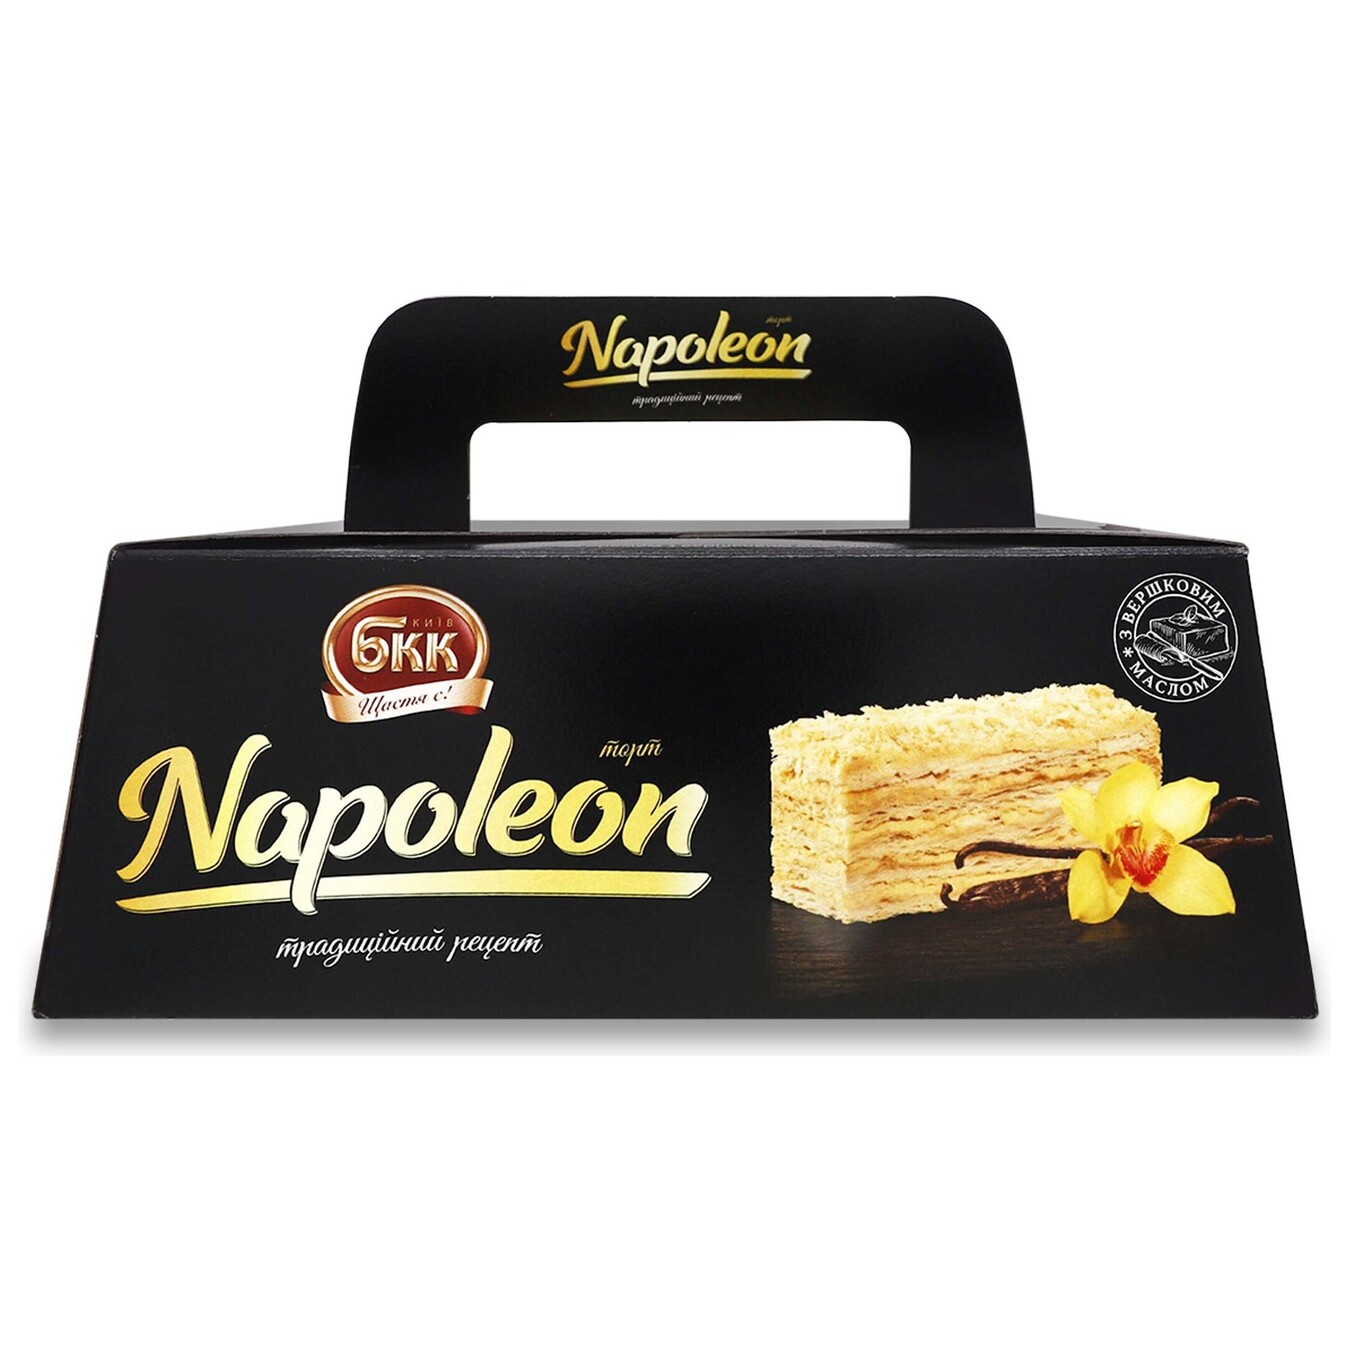 BKK Napoleon Cake 700g